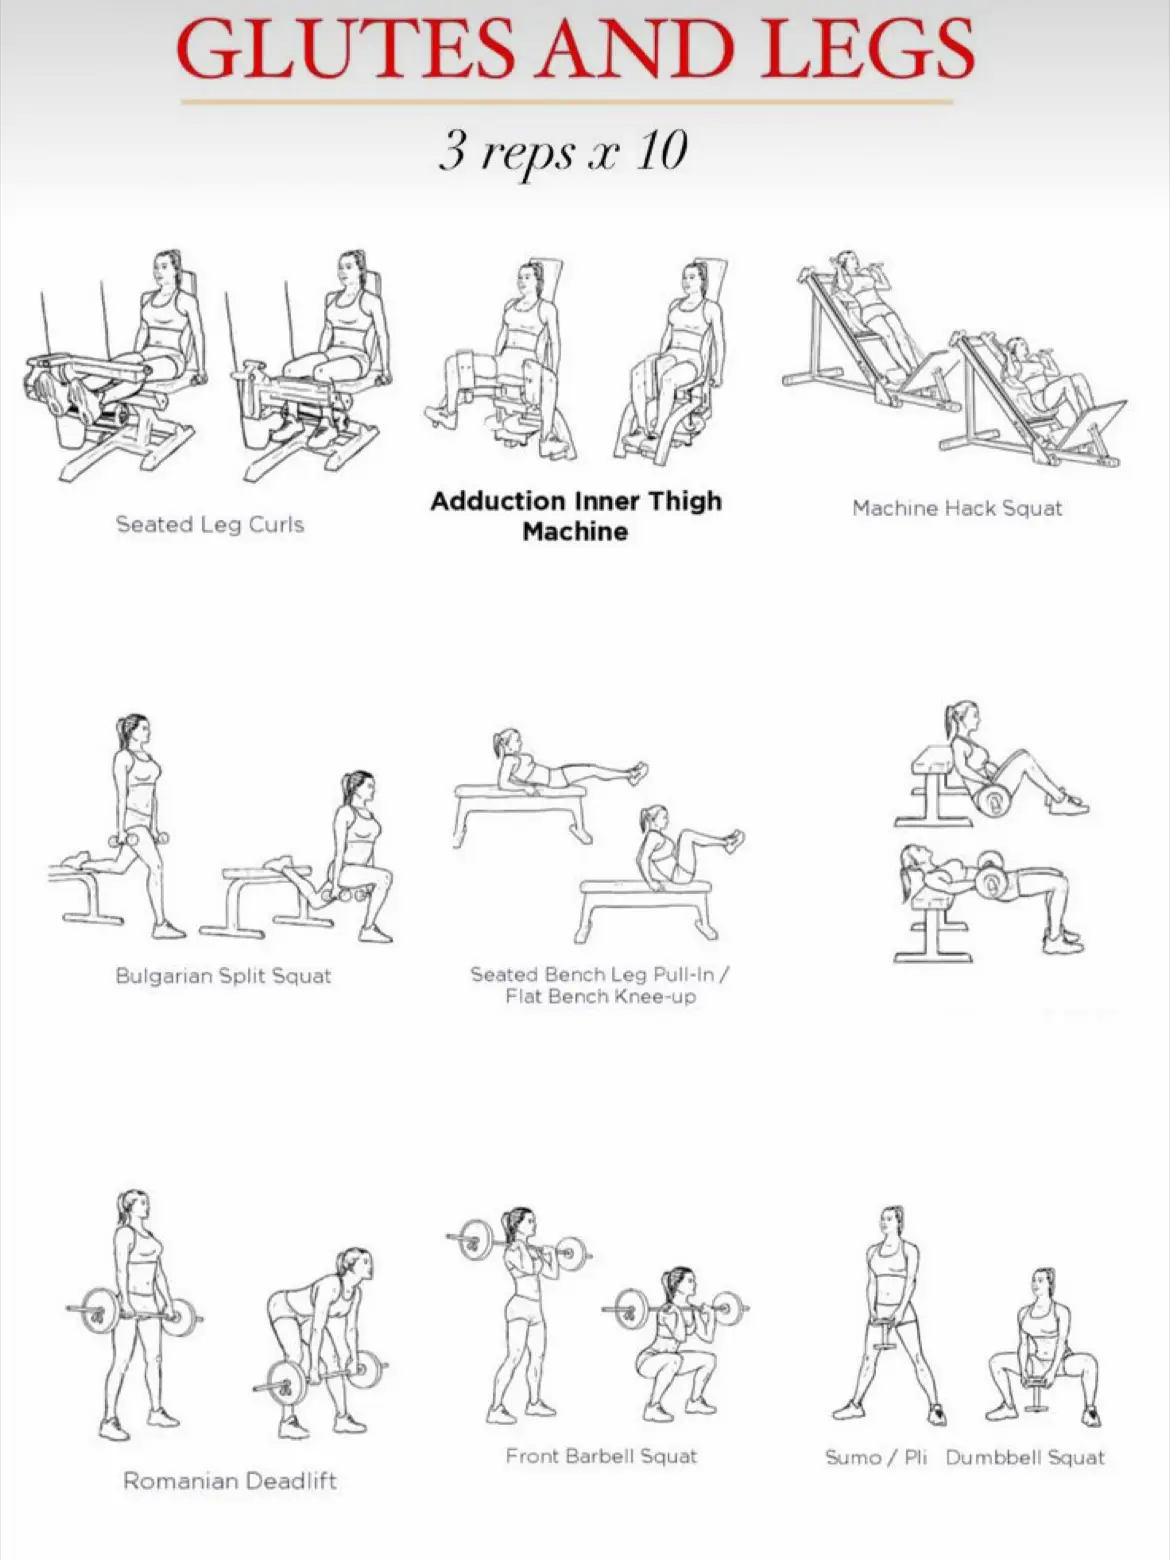 Full leg workout swipe left🔥 Reps & Sets 👇🏾 Leg extensions 12 x